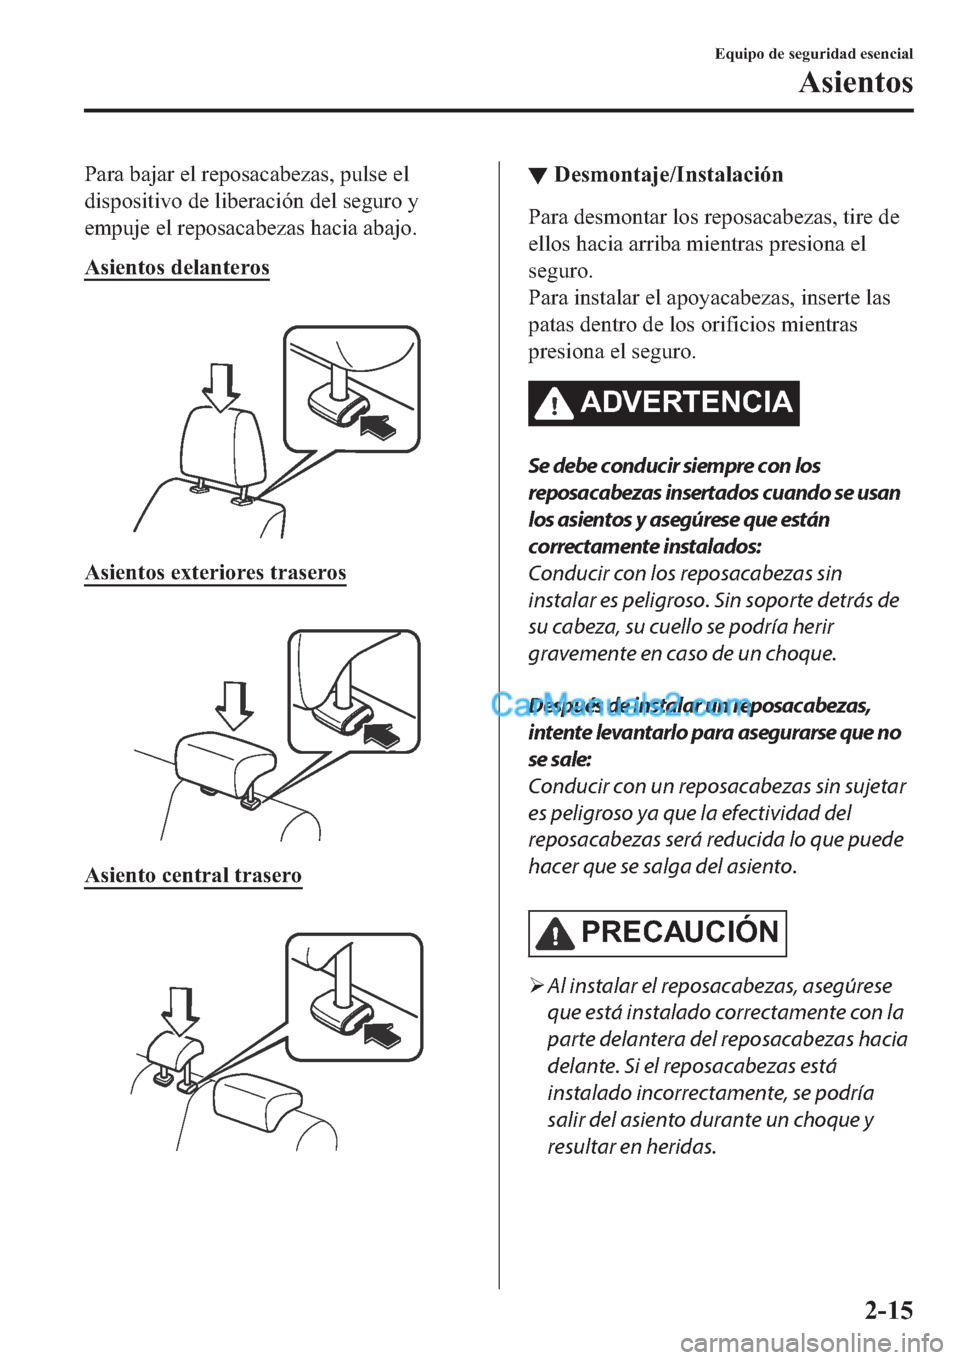 MAZDA MODEL 2 2019  Manual del propietario (in Spanish) �3�D�U�D��E�D�M�D�U��H�O��U�H�S�R�V�D�F�D�E�H�]�D�V���S�X�O�V�H��H�O
�G�L�V�S�R�V�L�W�L�Y�R��G�H��O�L�E�H�U�D�F�L�y�Q��G�H�O��V�H�J�X�U�R��\
�H�P�S�X�M�H��H�O��U�H�S�R�V�D�F�D�E�H�]�D�V�